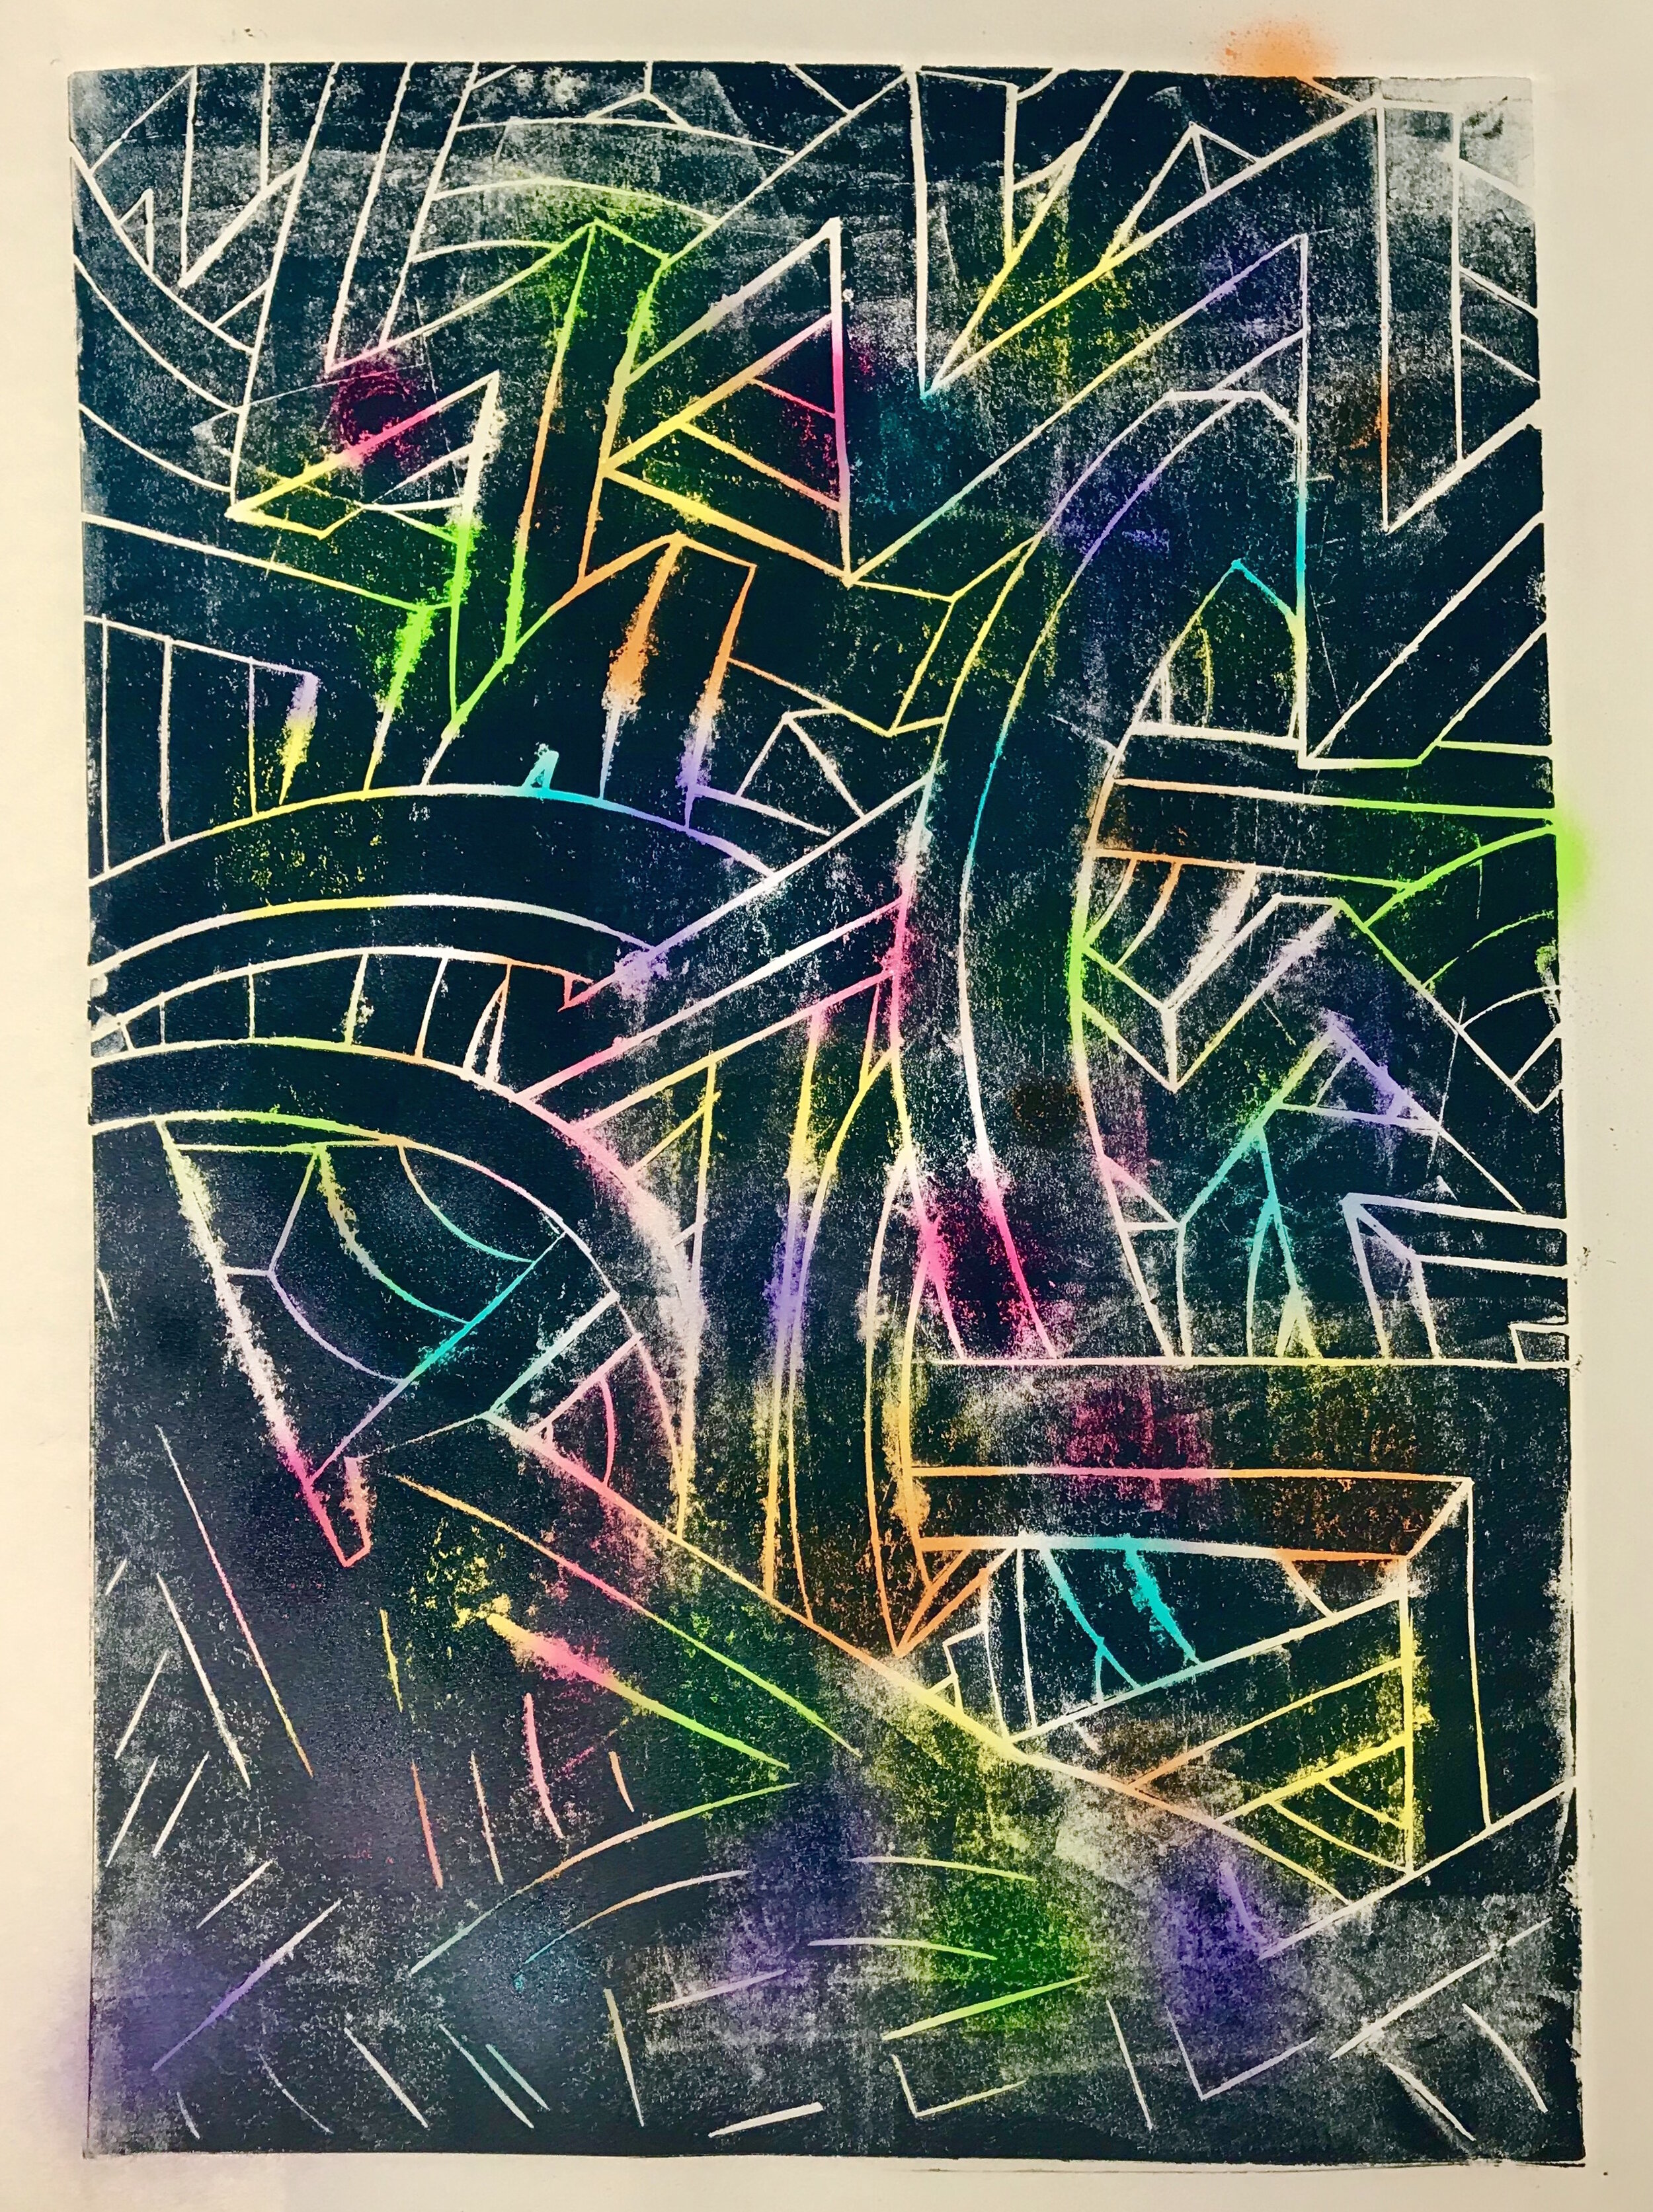 Linocut print and spray paint on newsprint, 59.1 x 42 cm, 2020